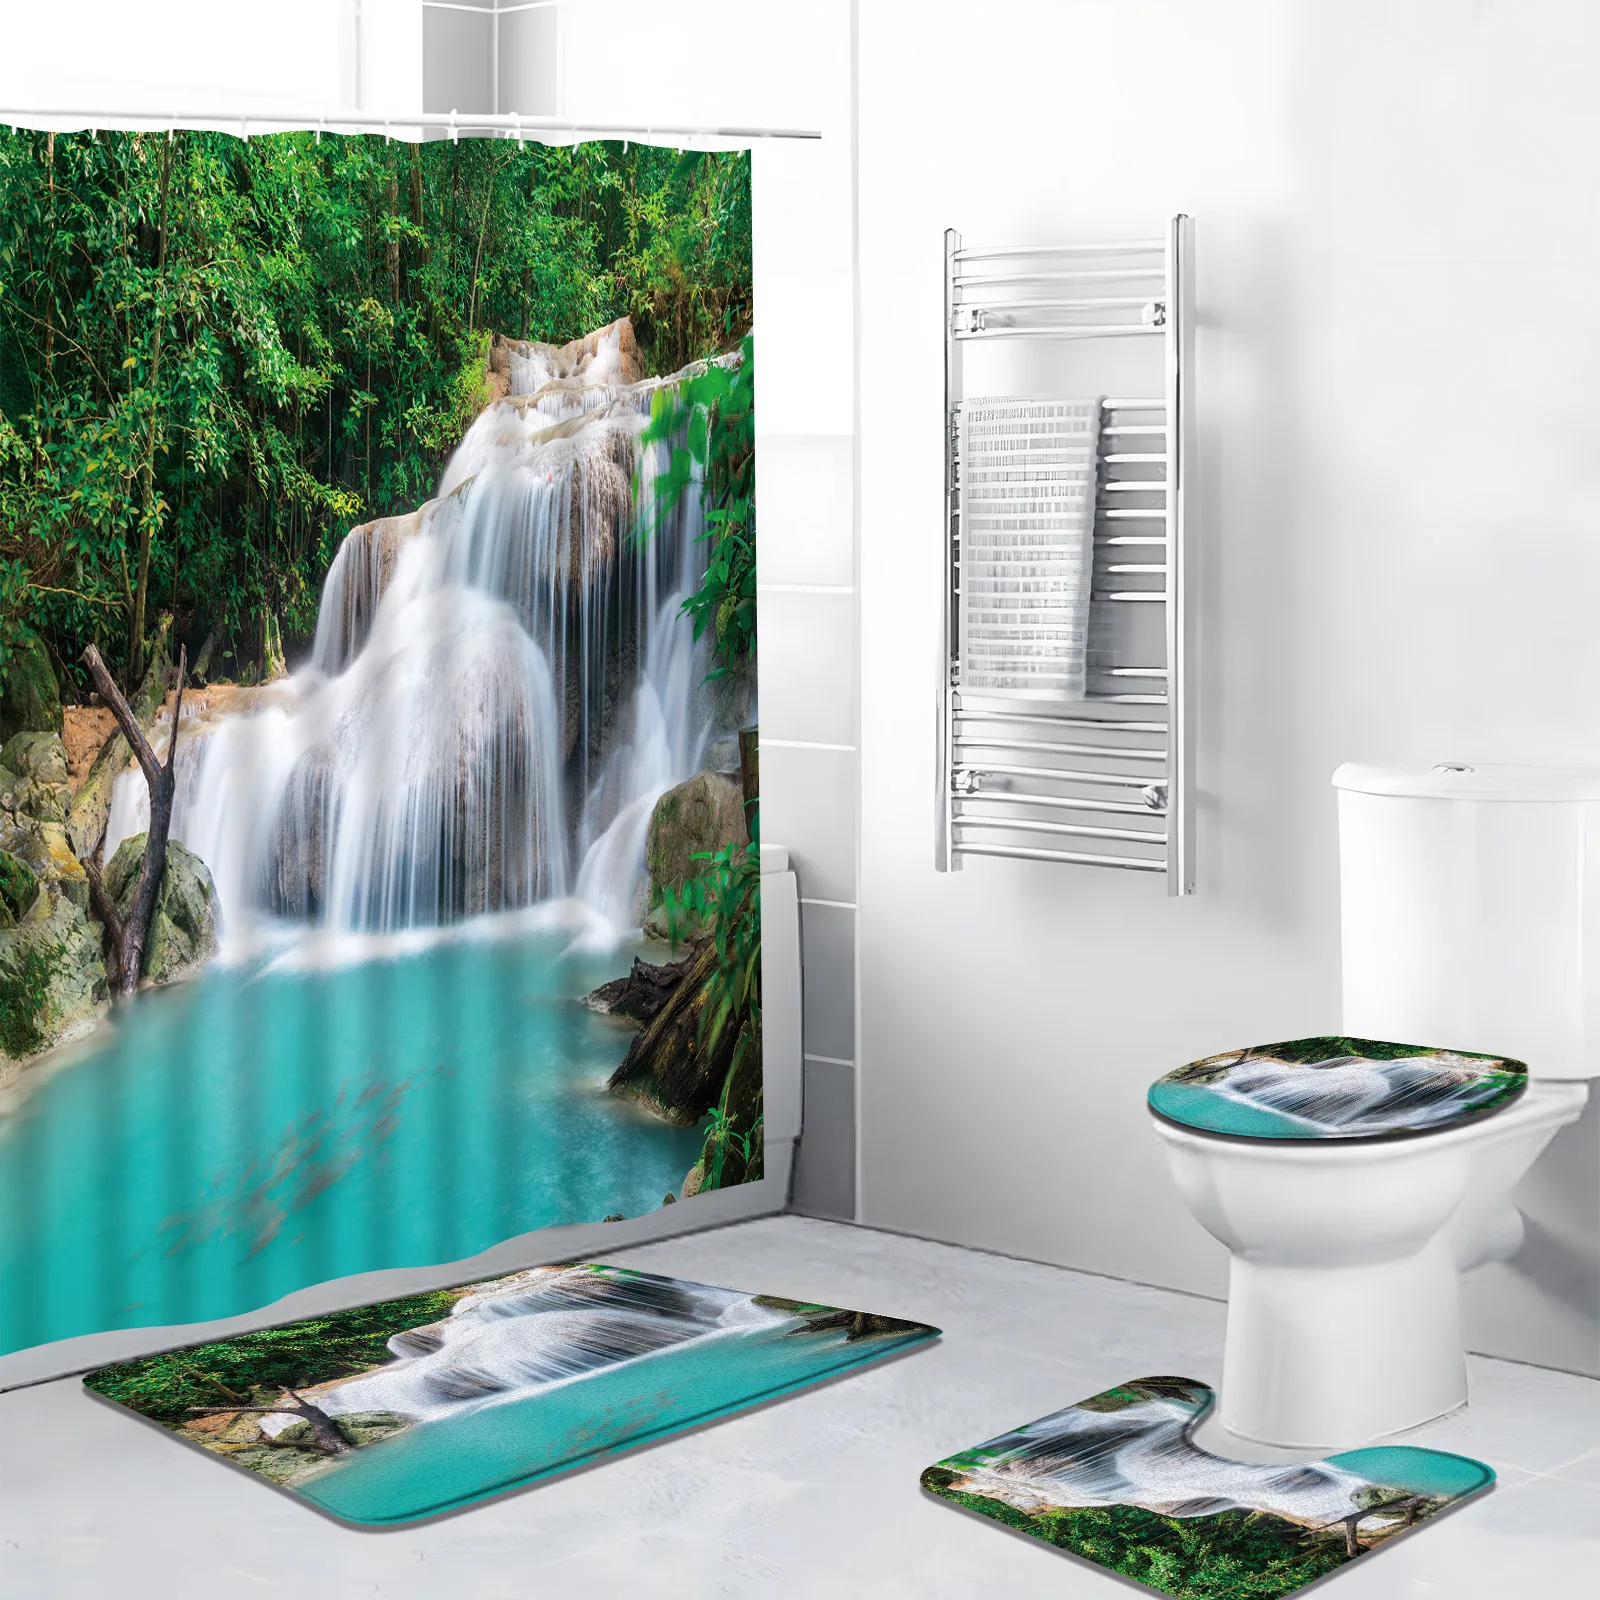 

4pcs/Set Forest Landscape Shower Curtain Tropical Jungle Plant Waterfall Nature Scenery Bathroom Decor Bath Mat Rug Toilet Cover